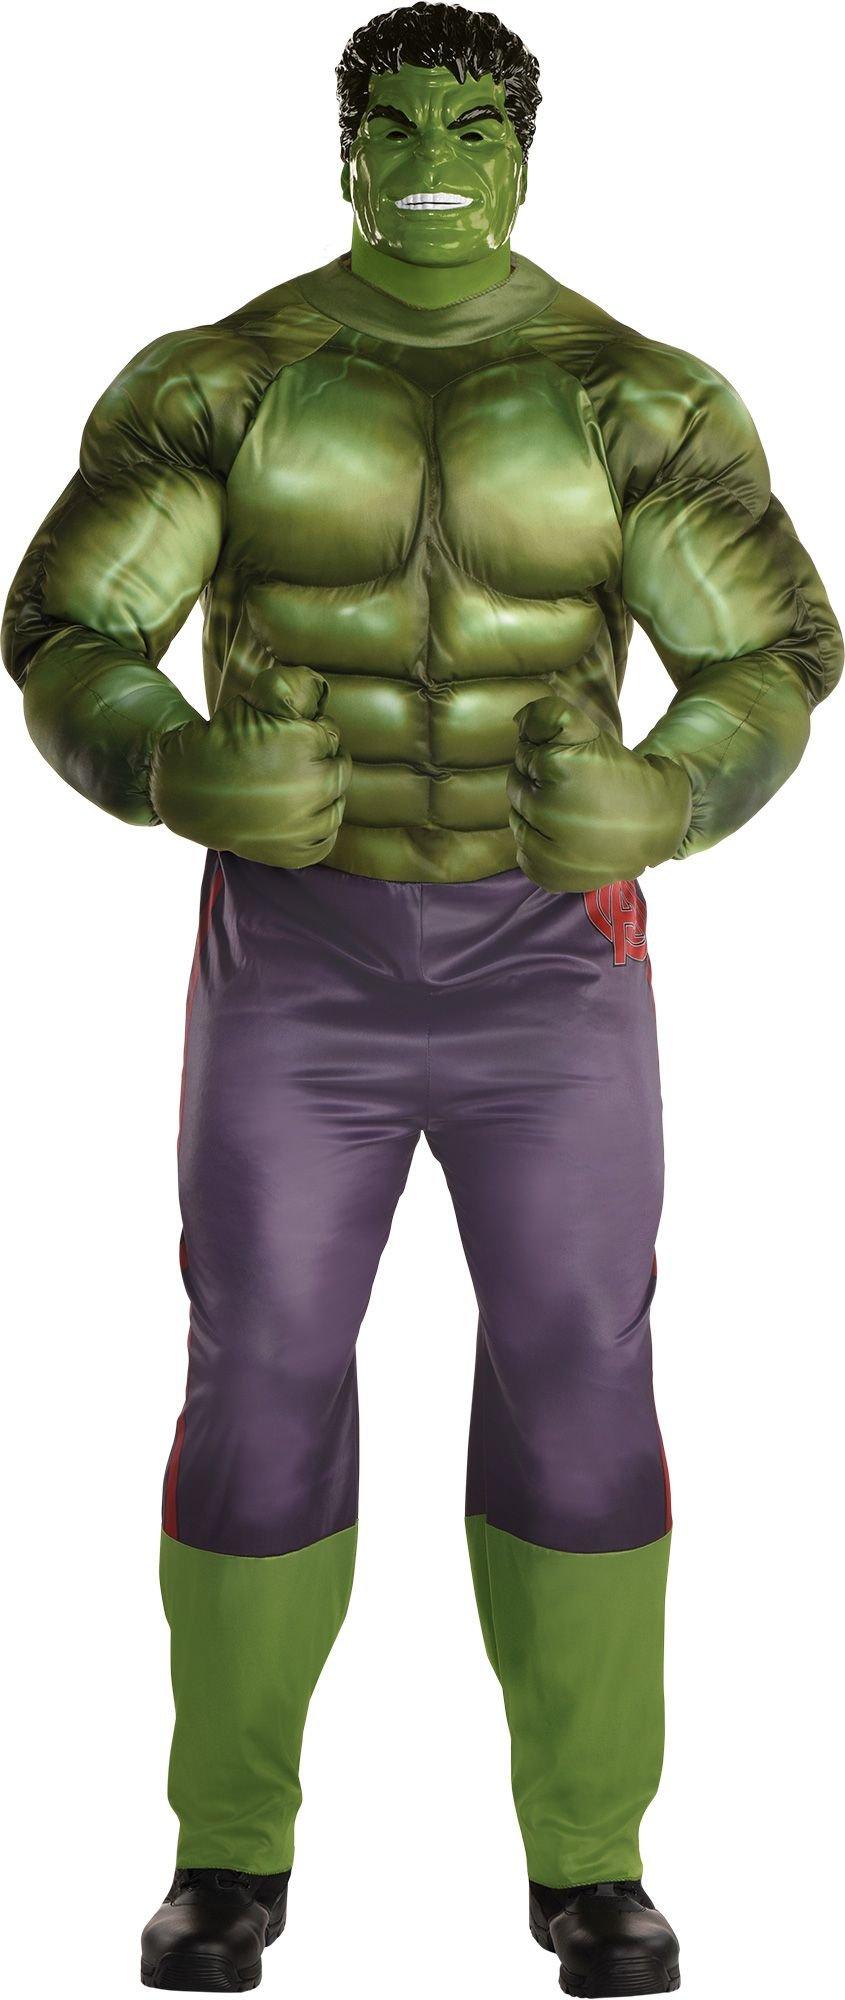 SP_10323  Incredible hulk costume, Hulk costume, Best cosplay